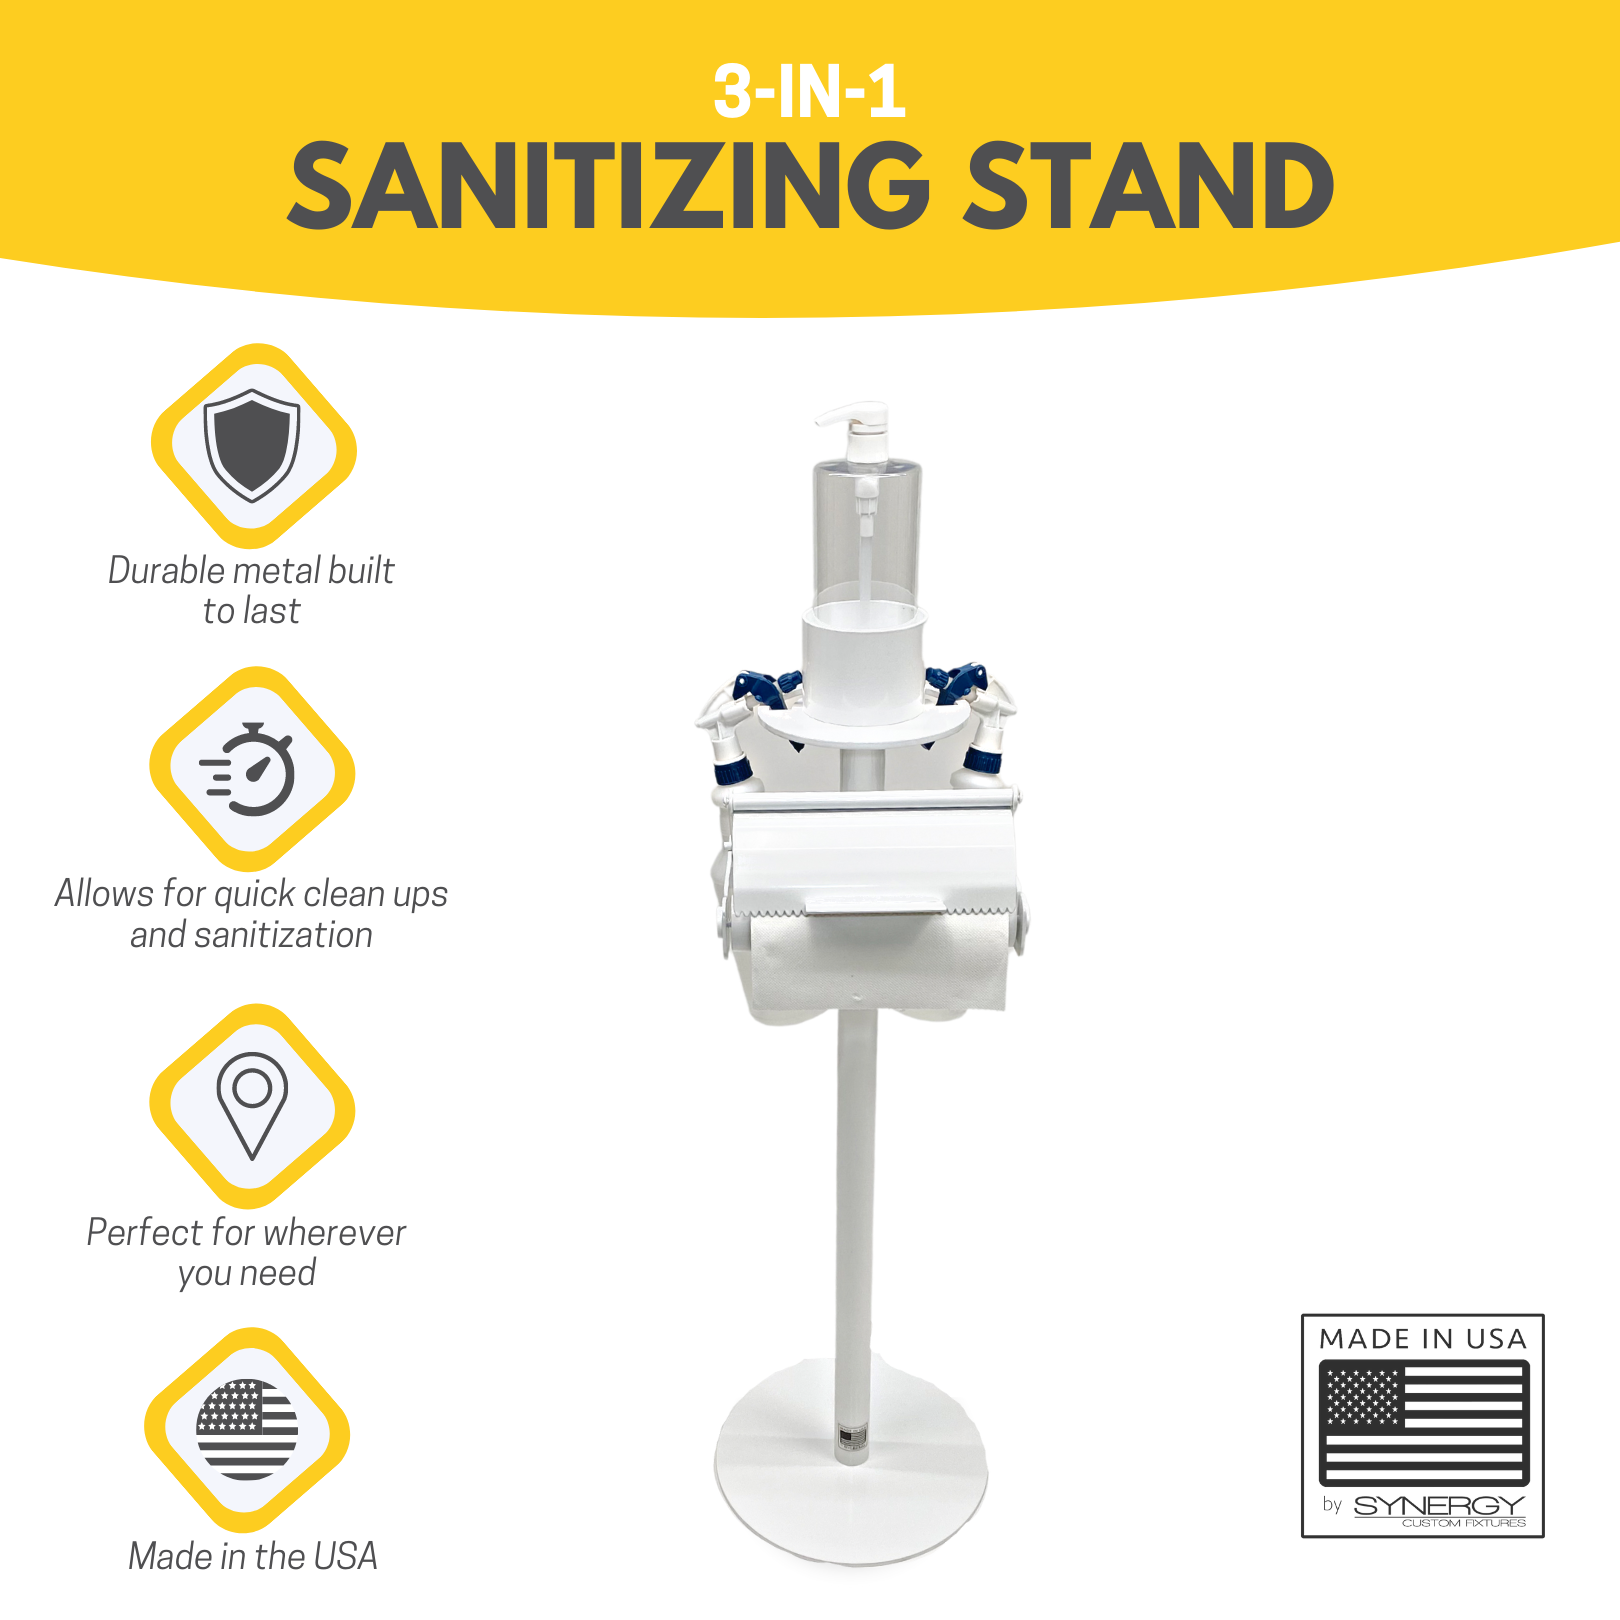 Sanitizing Stand